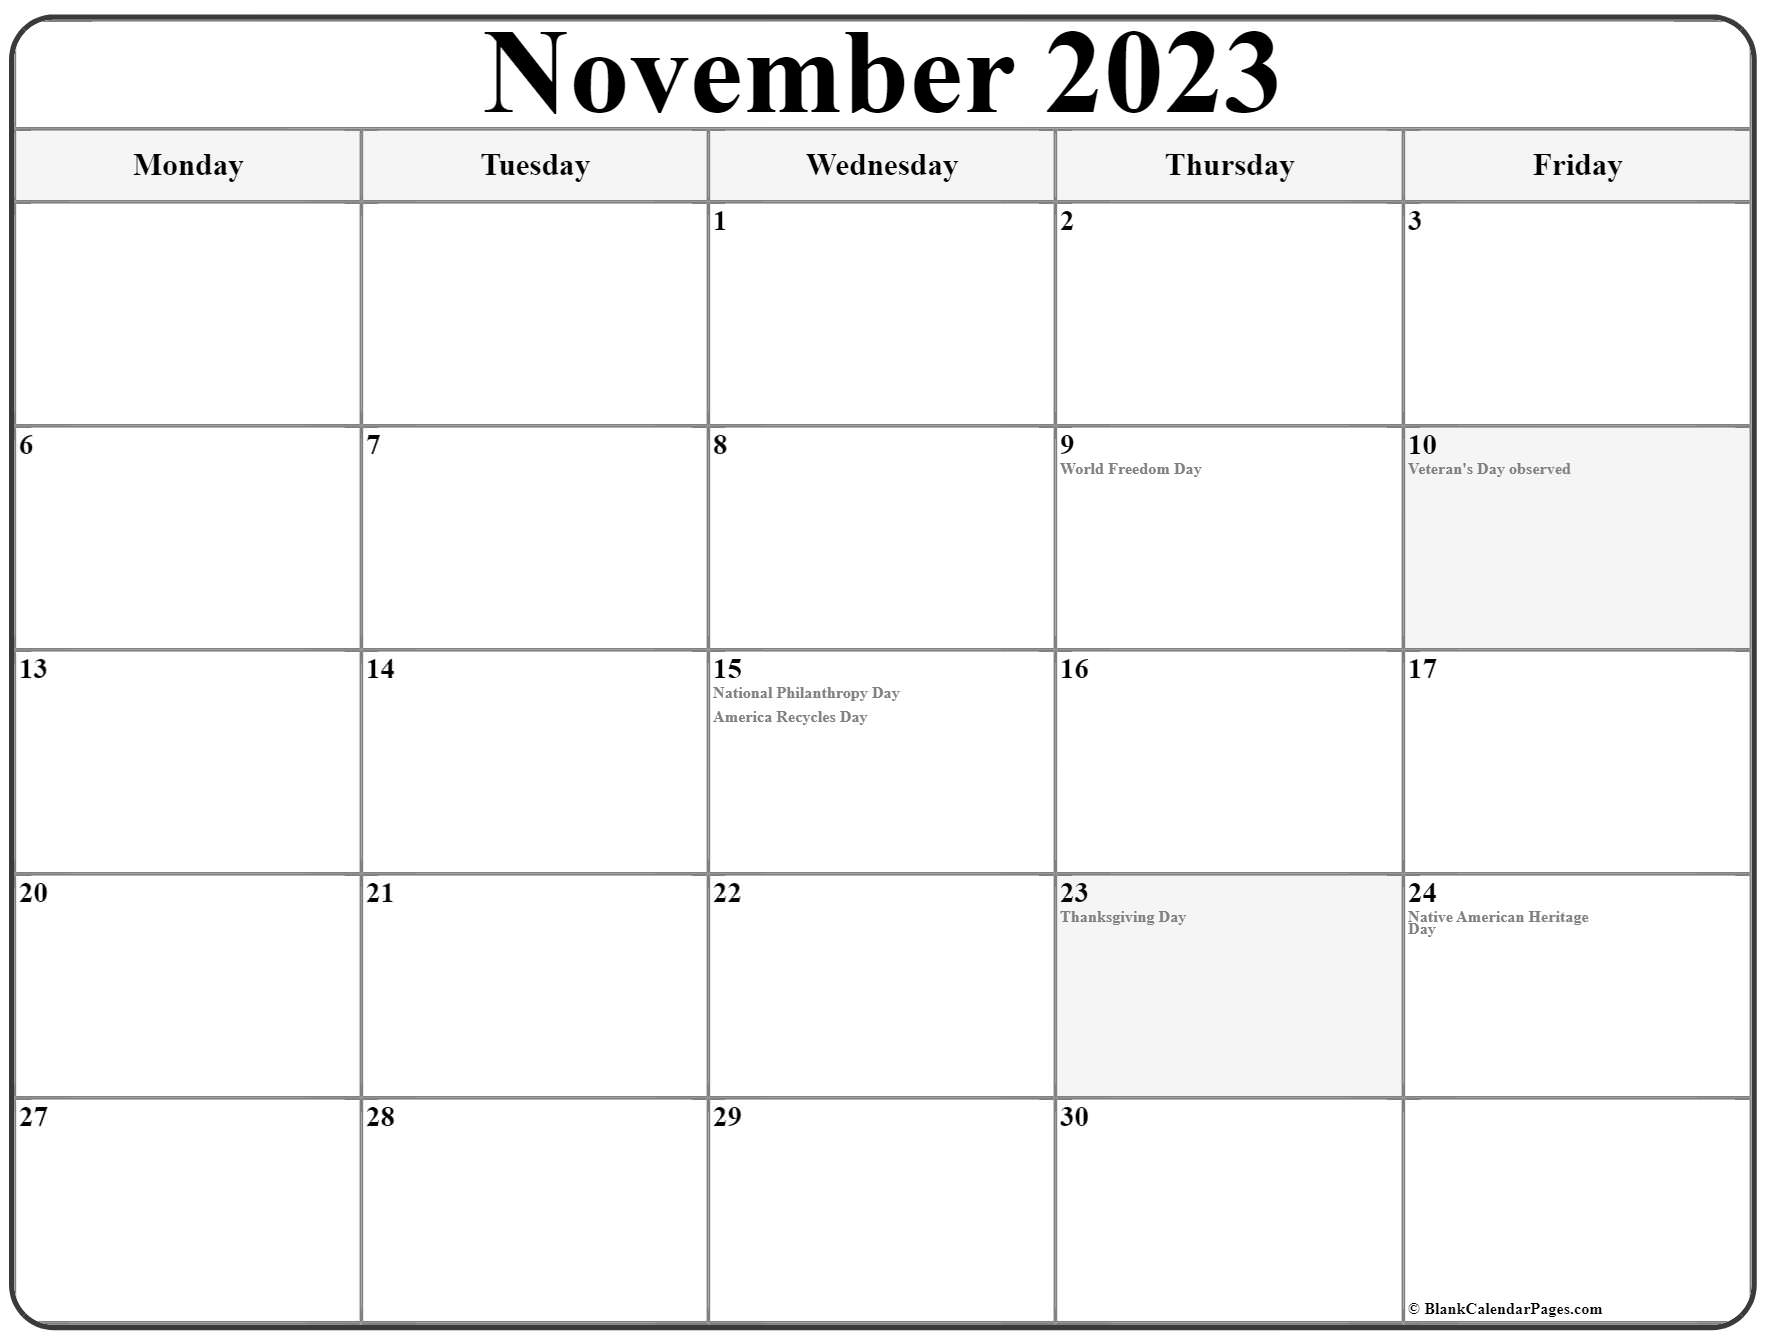 novem-2023-calendar-with-zodiac-signs-pelajaran